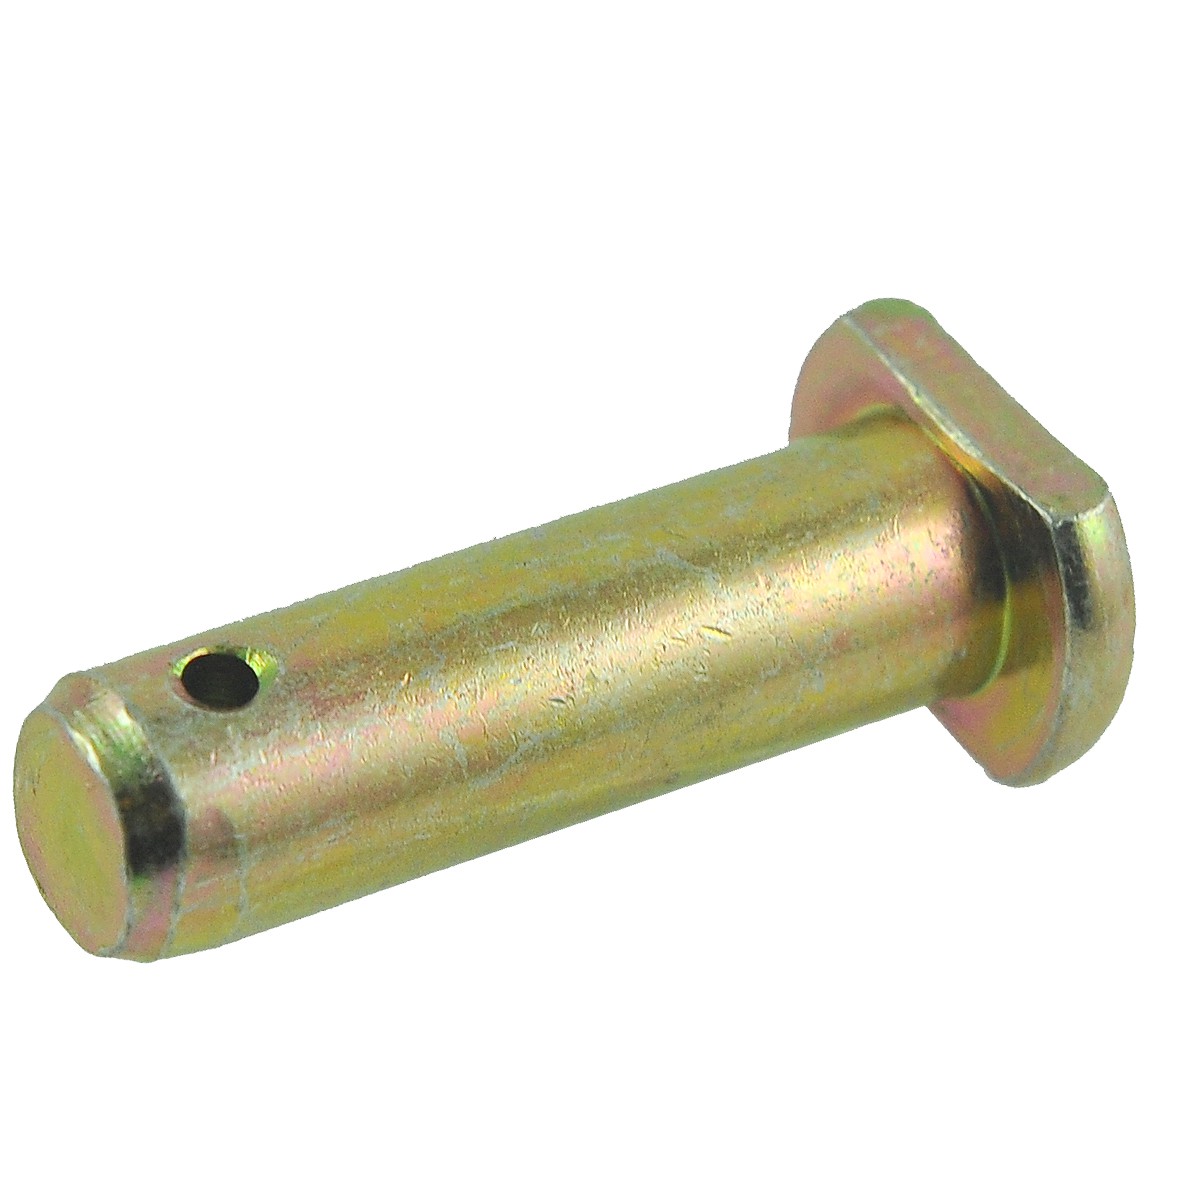 Three-point linkage pin / 15.70 x 43 mm / Kubota L4508 / 38747-71582 / 5-25-104-20